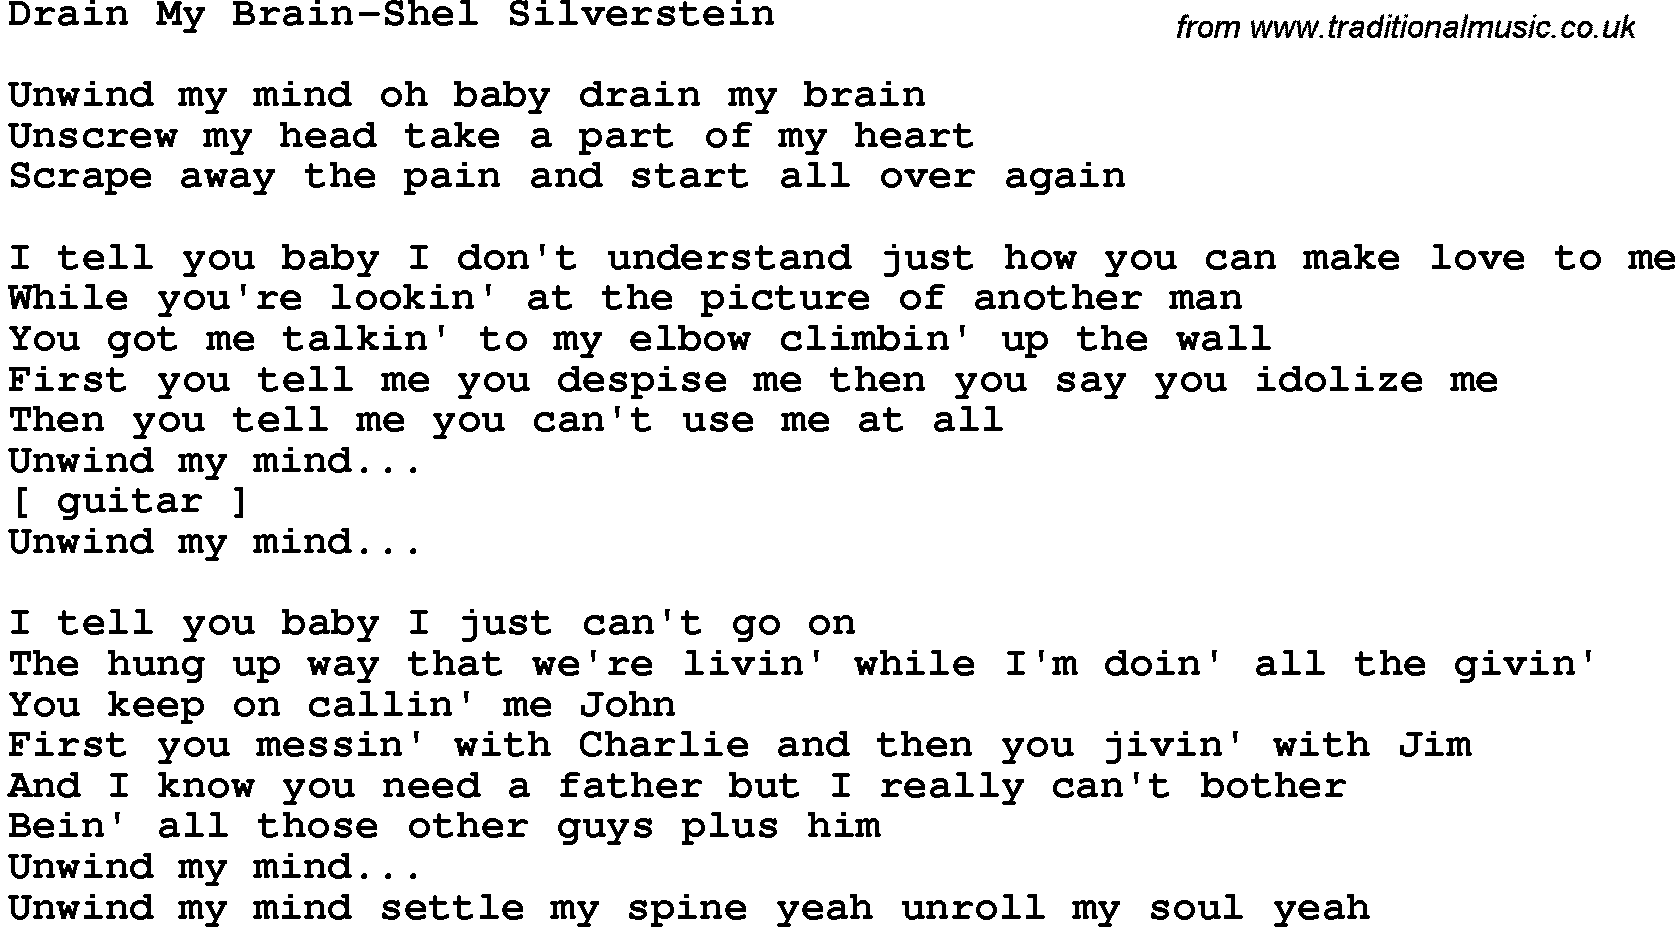 Novelty song: Drain My Brain-Shel Silverstein lyrics